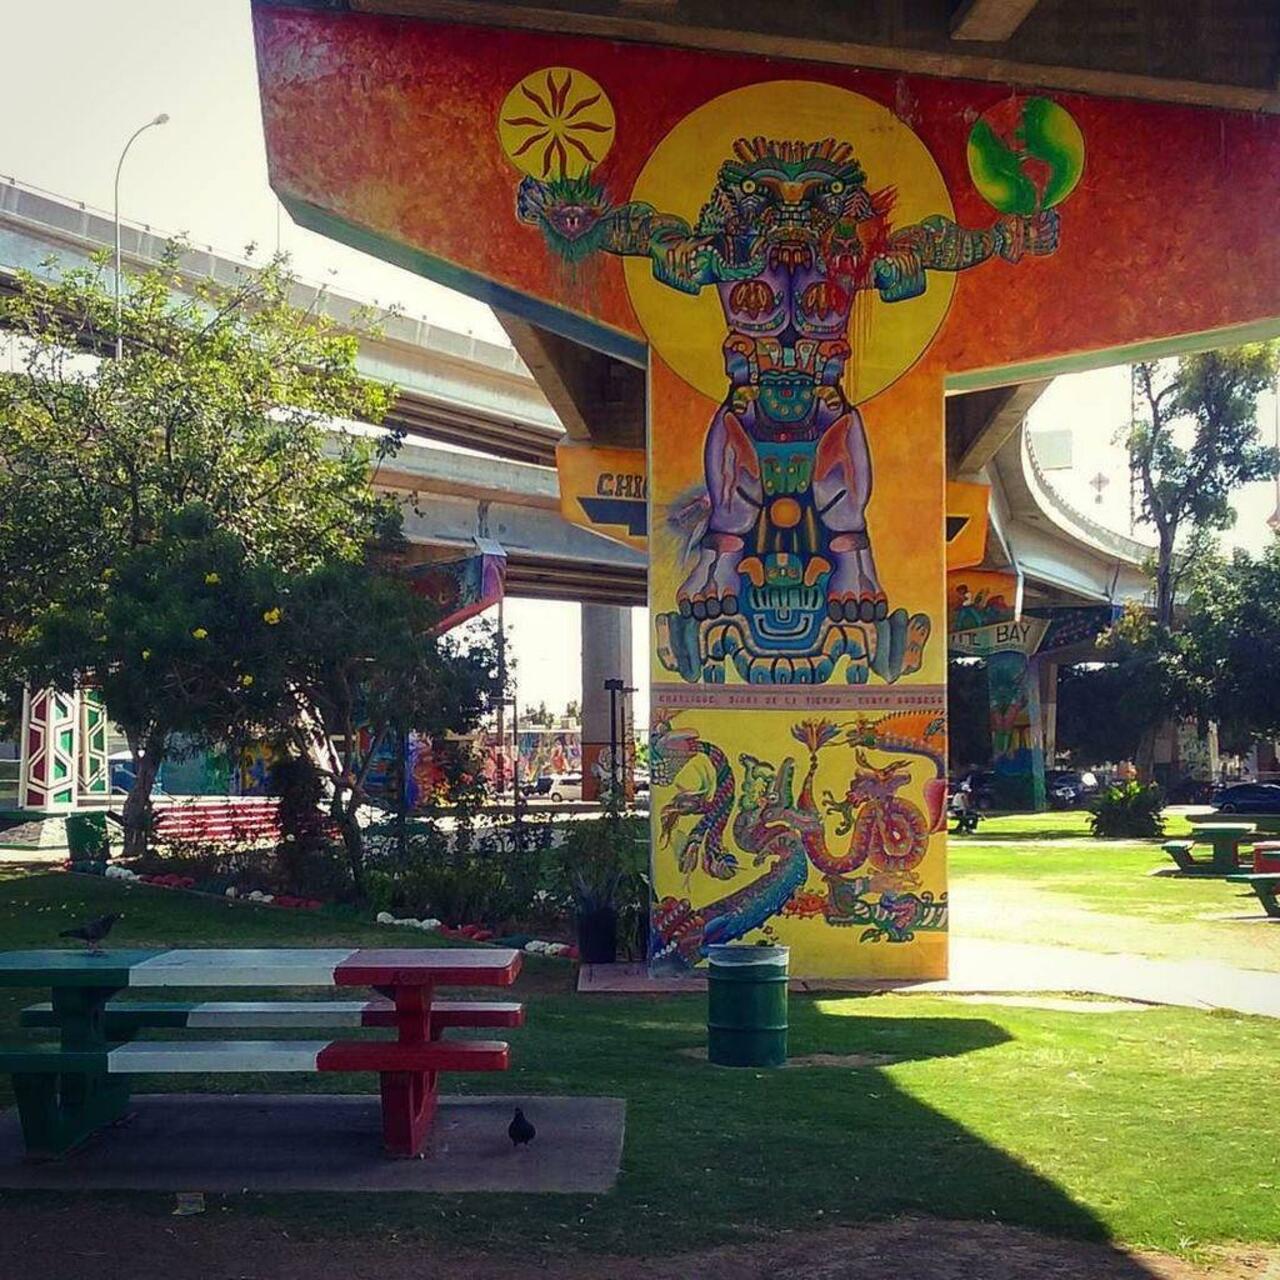 Balance
#art #chicanopark #streetart #eagle #bird #graffiti #urbanart #heritage #creative #dope #mural #barriologan… http://t.co/G6bkrnhG4q